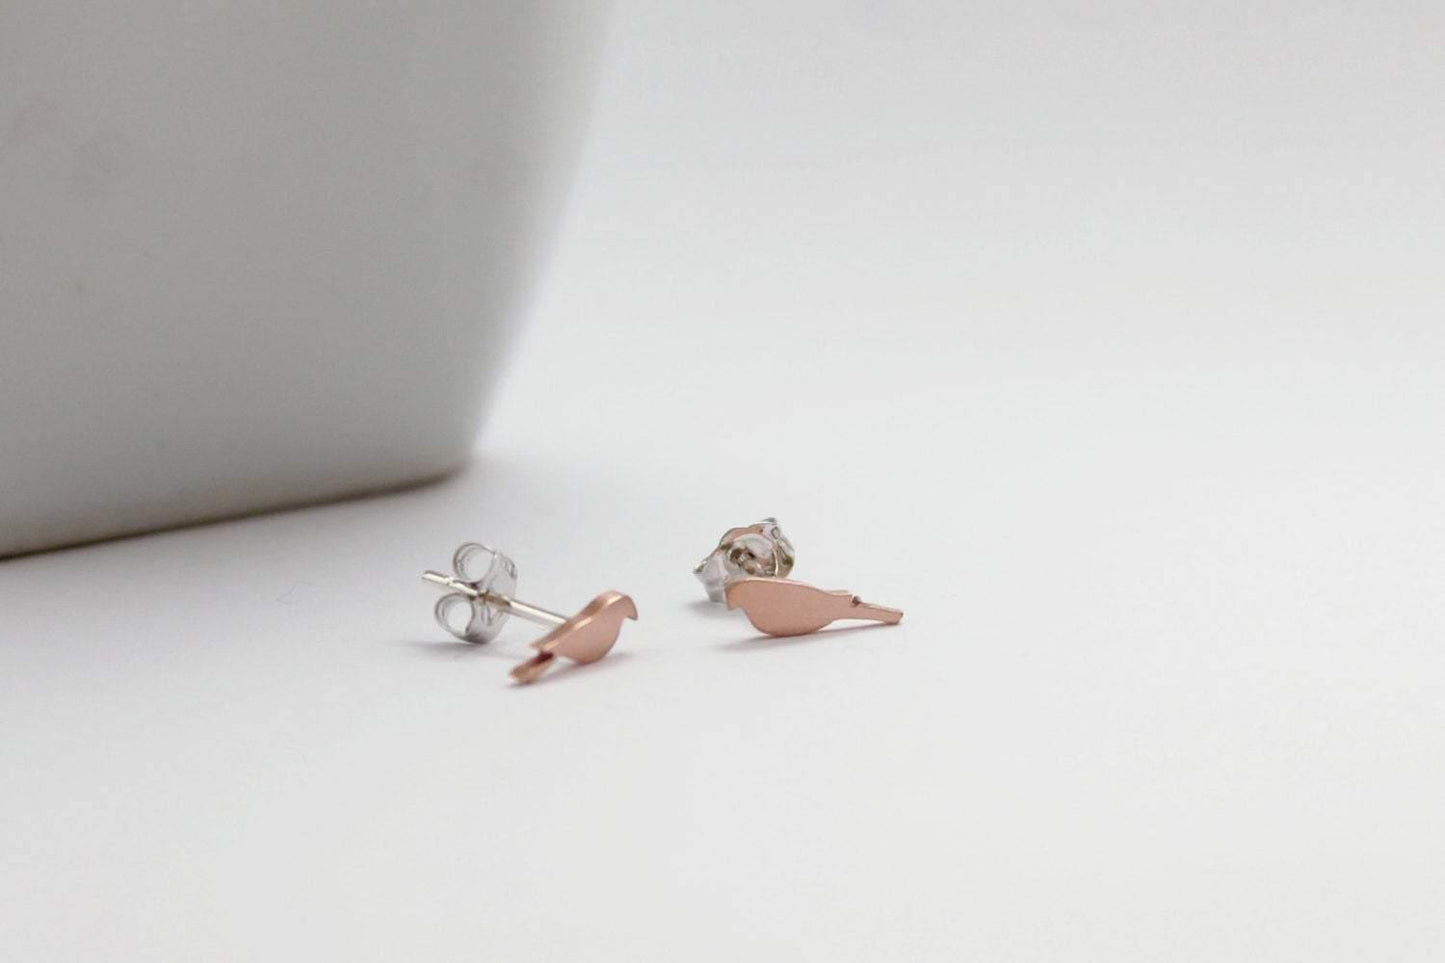 Little Copper Birdie Studs, Hand Crafted From Rich Copper, Sweet Bird Earrings - Sweet November Jewelry